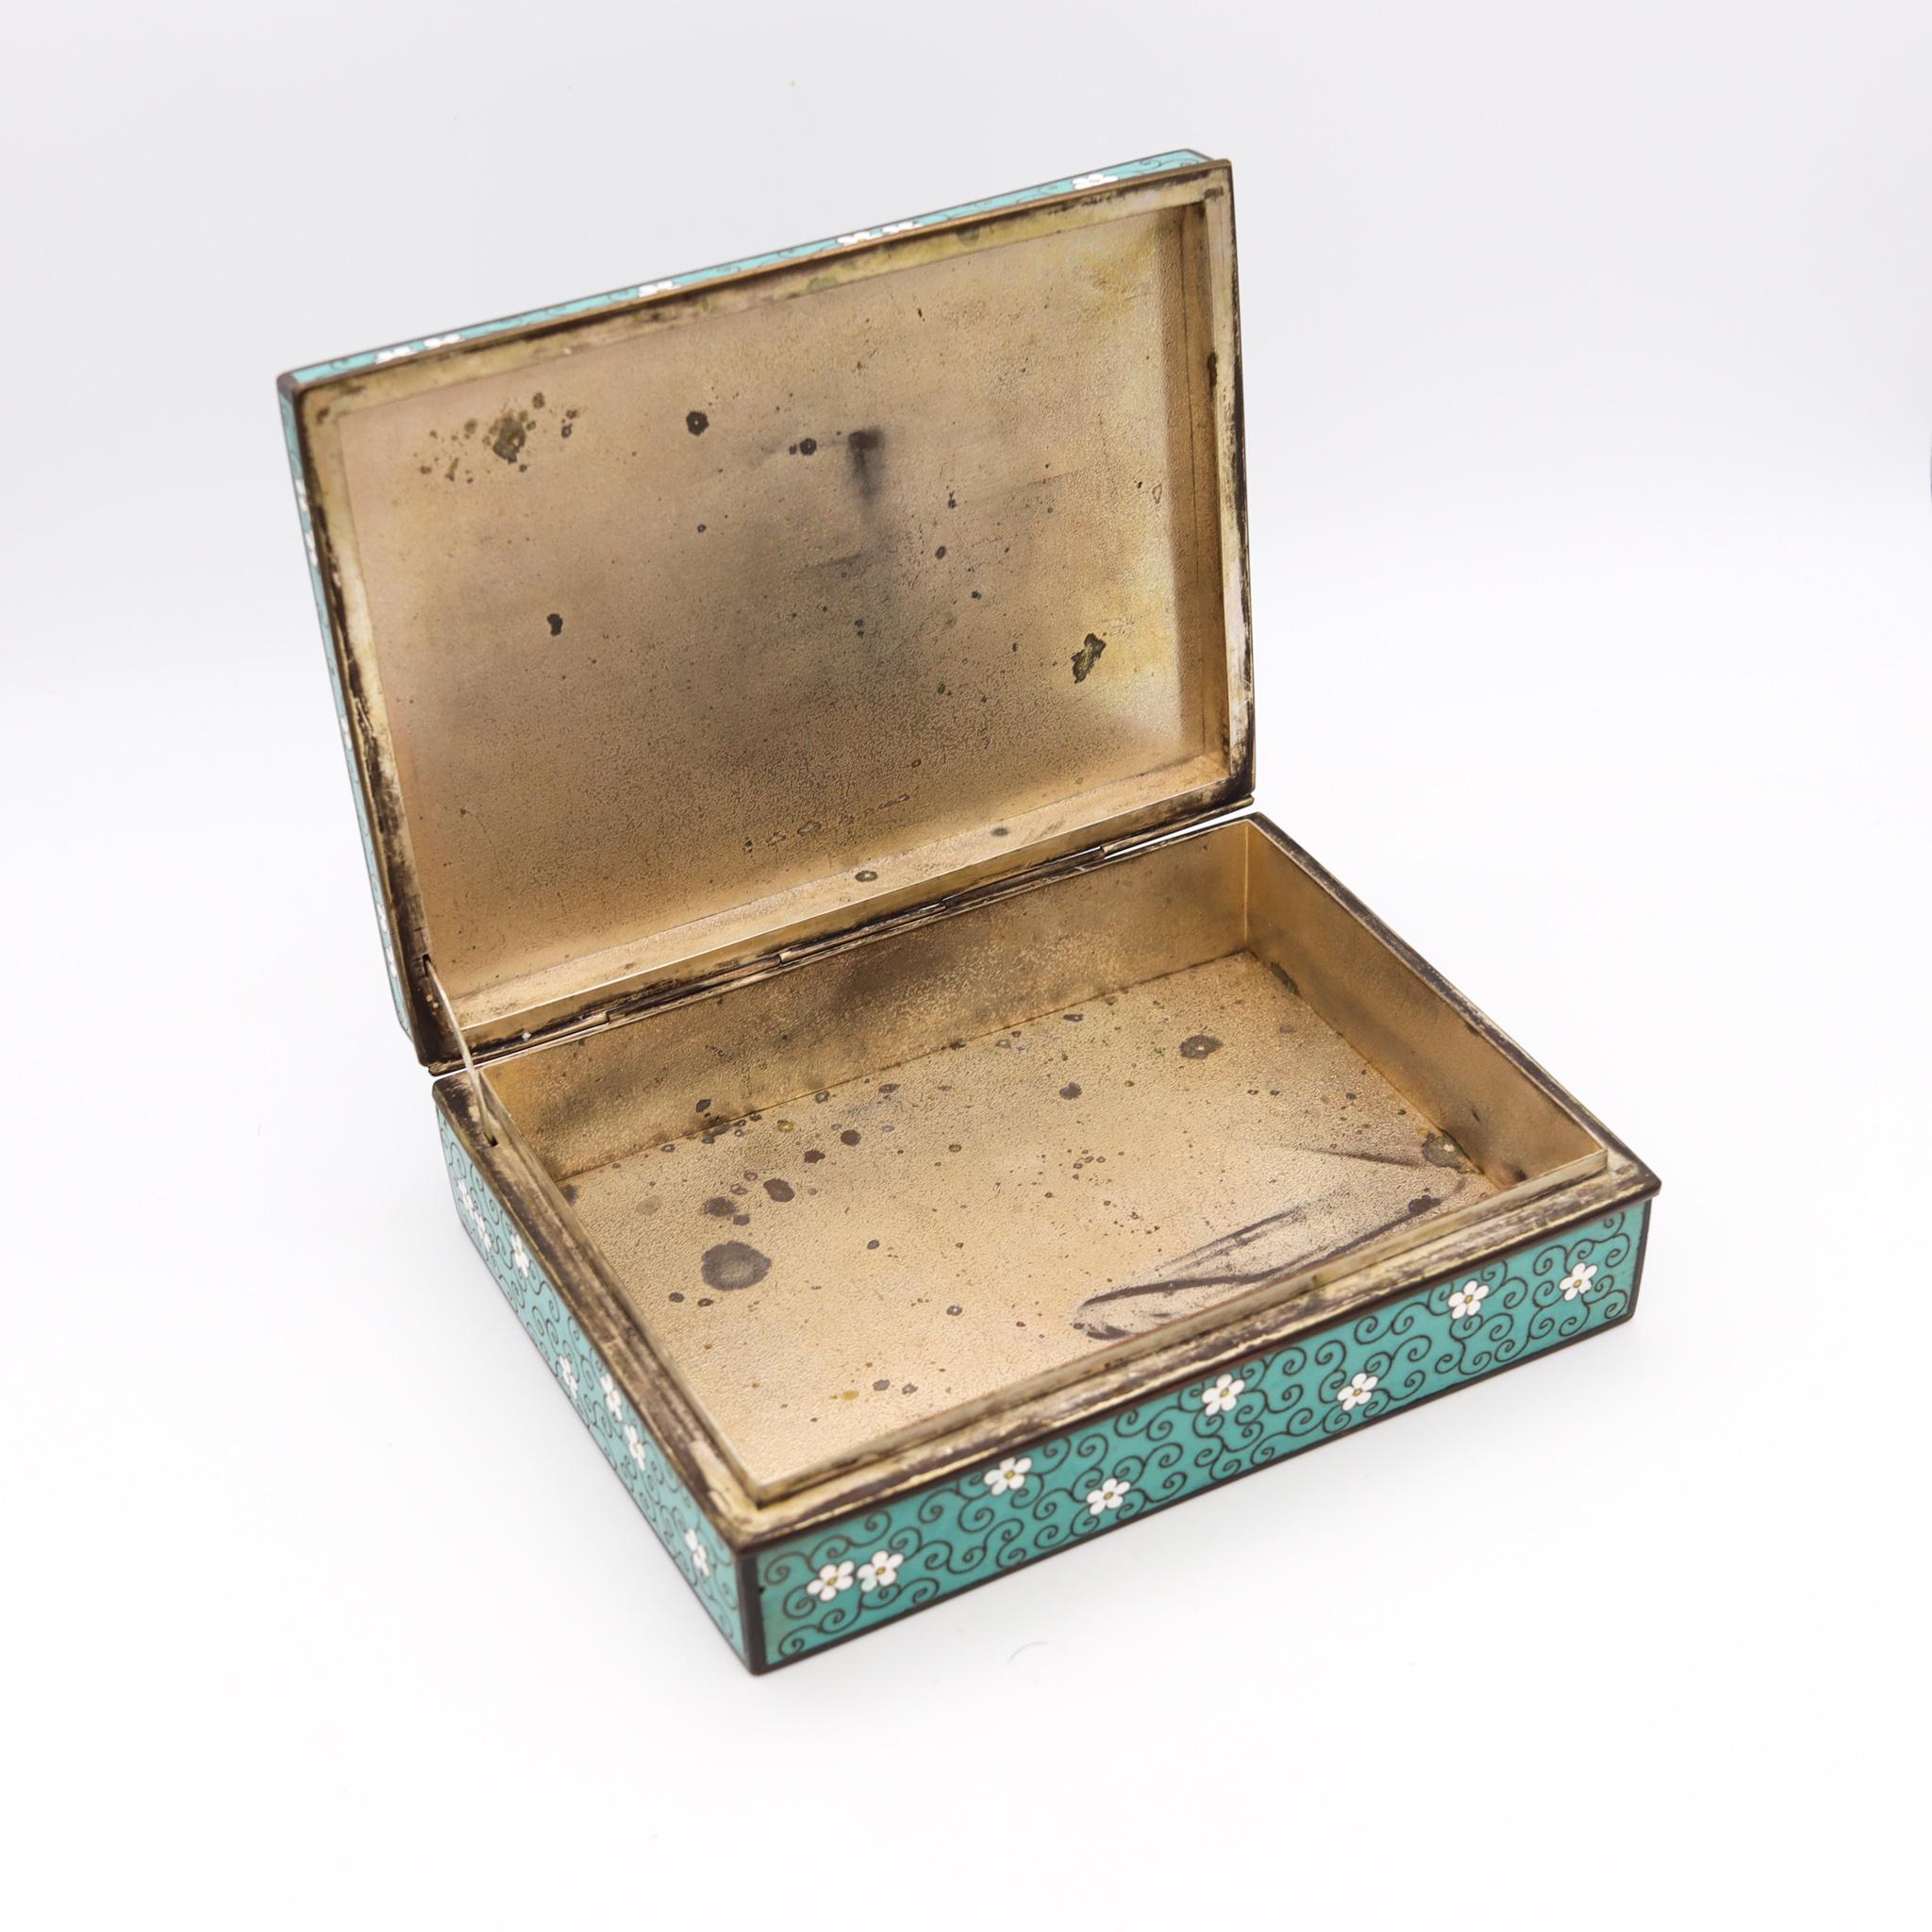 Late 19th Century Japan 1890 Meiji Period Rectangular Bronze Box with Colorful Enamel Cloisonne